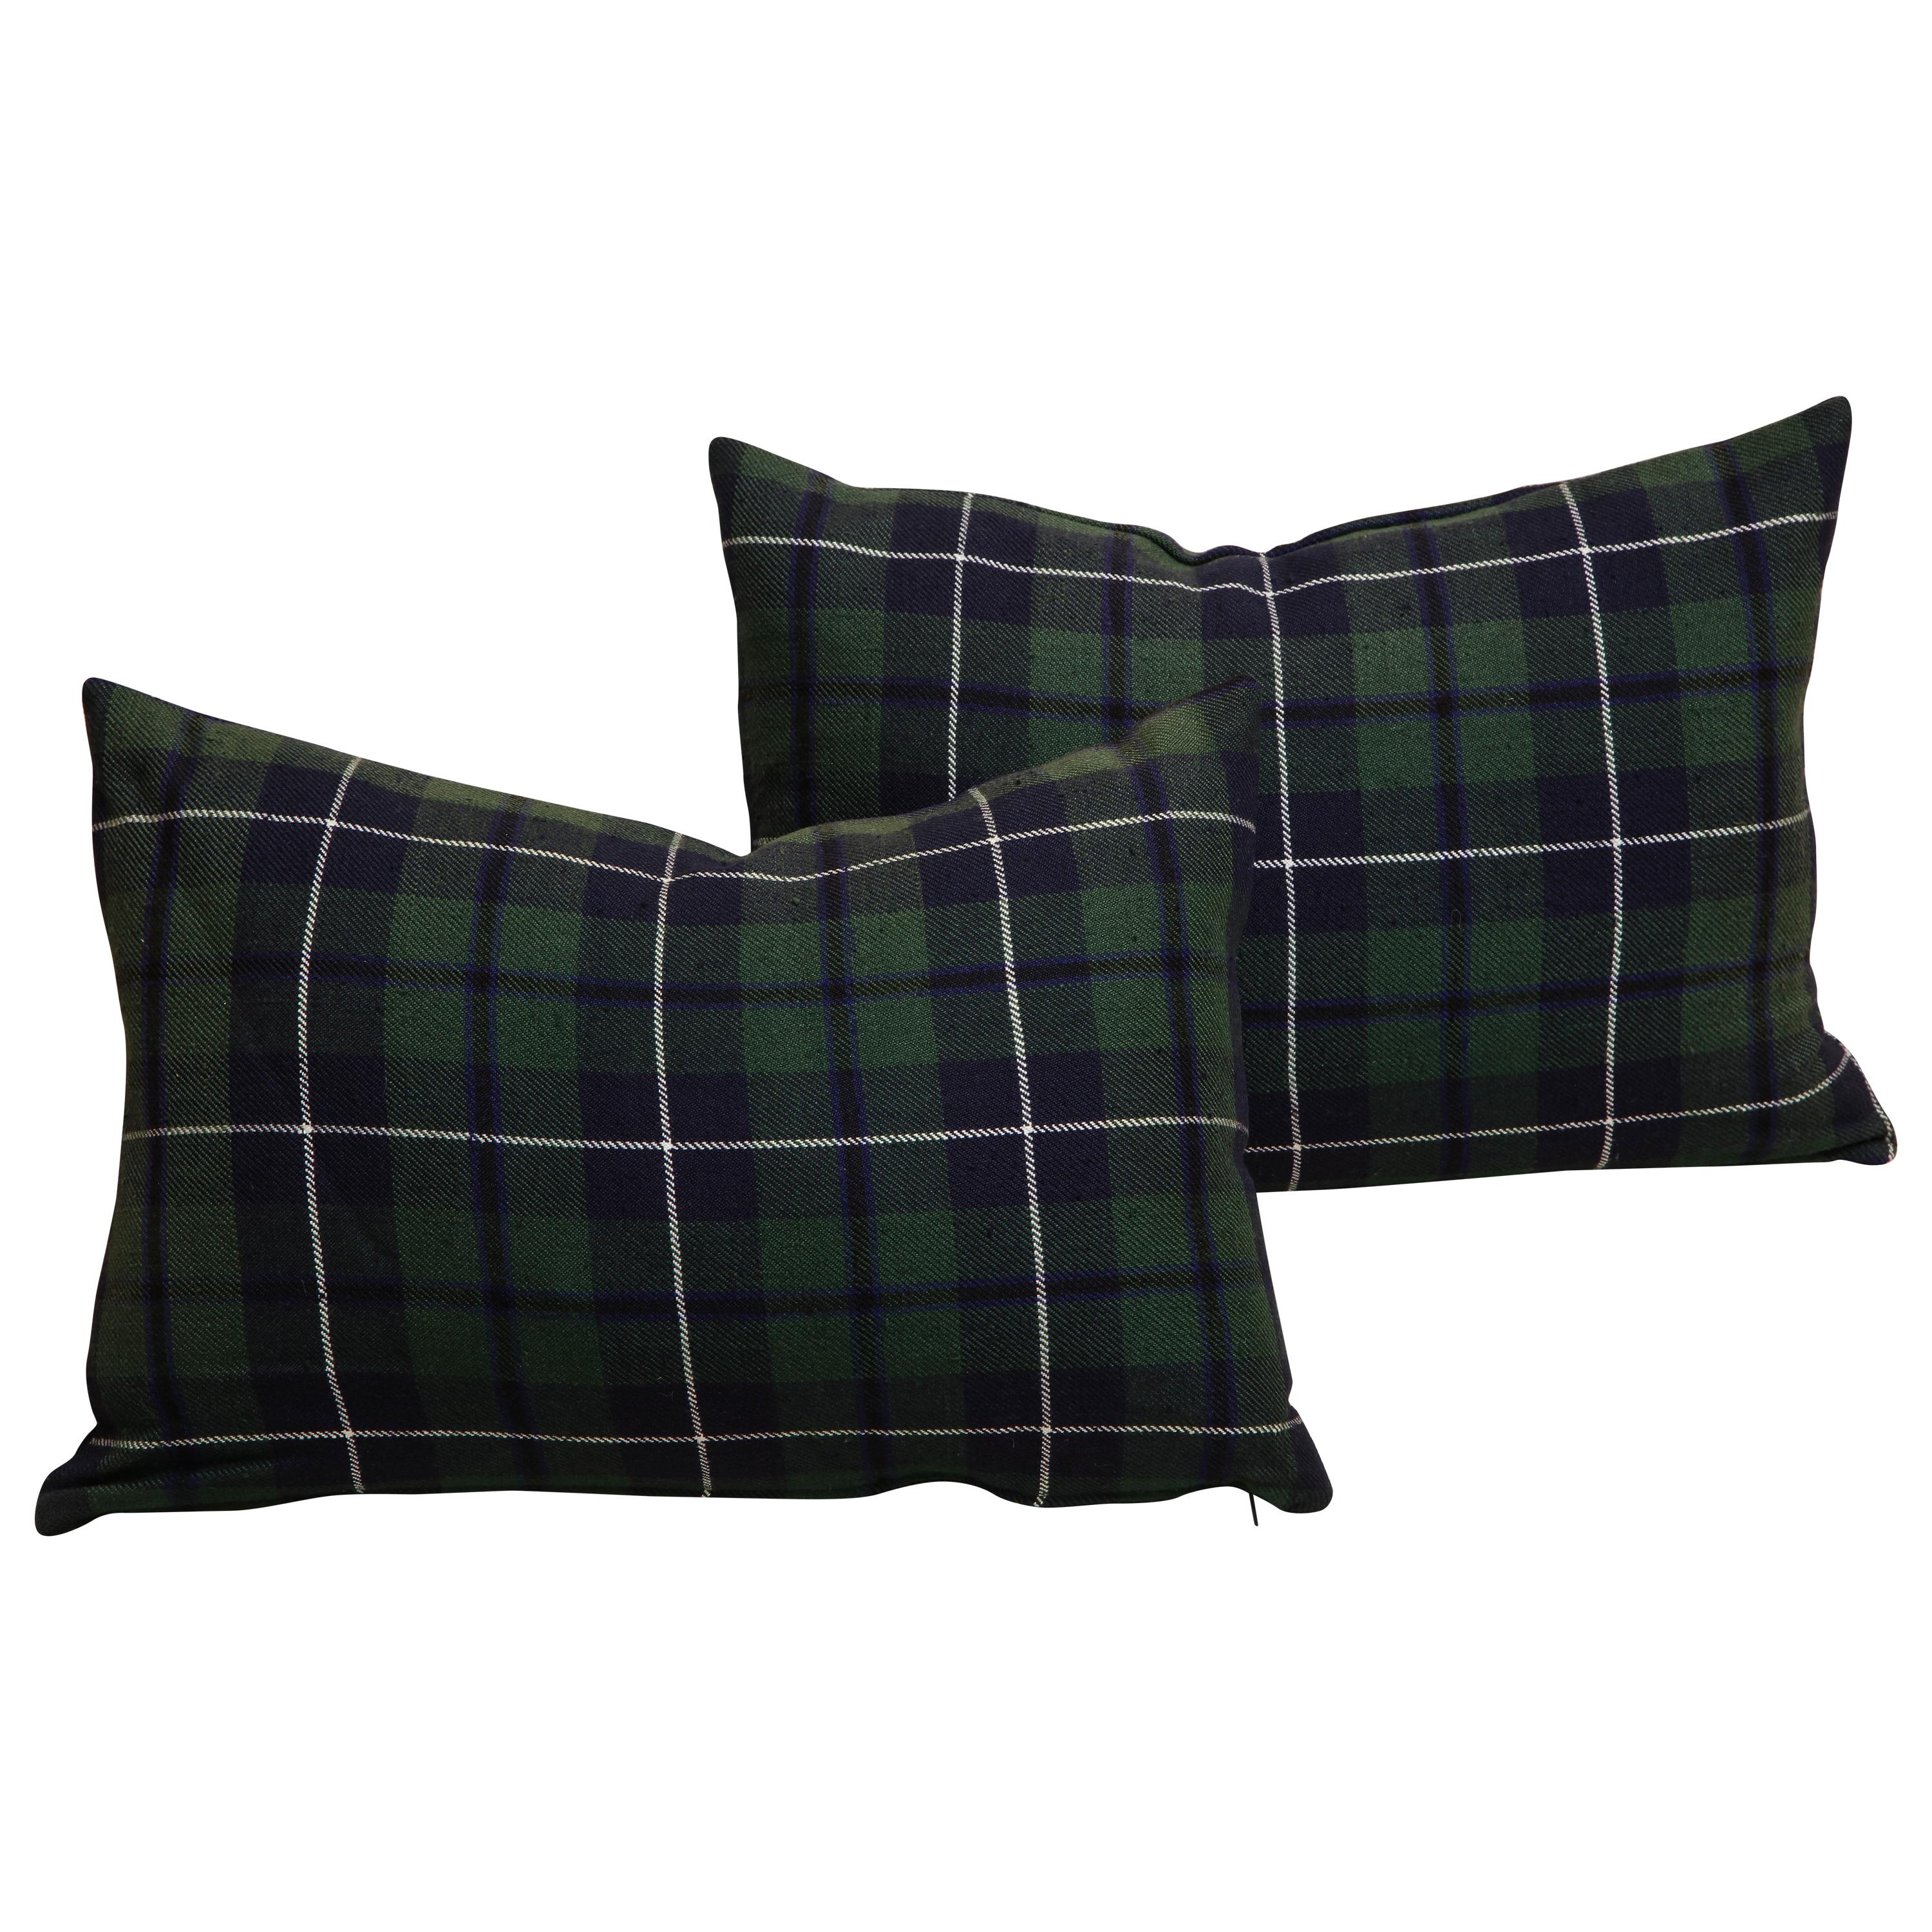 Tartan Pillows Associated to Clan Urquhart from Scotland For Sale